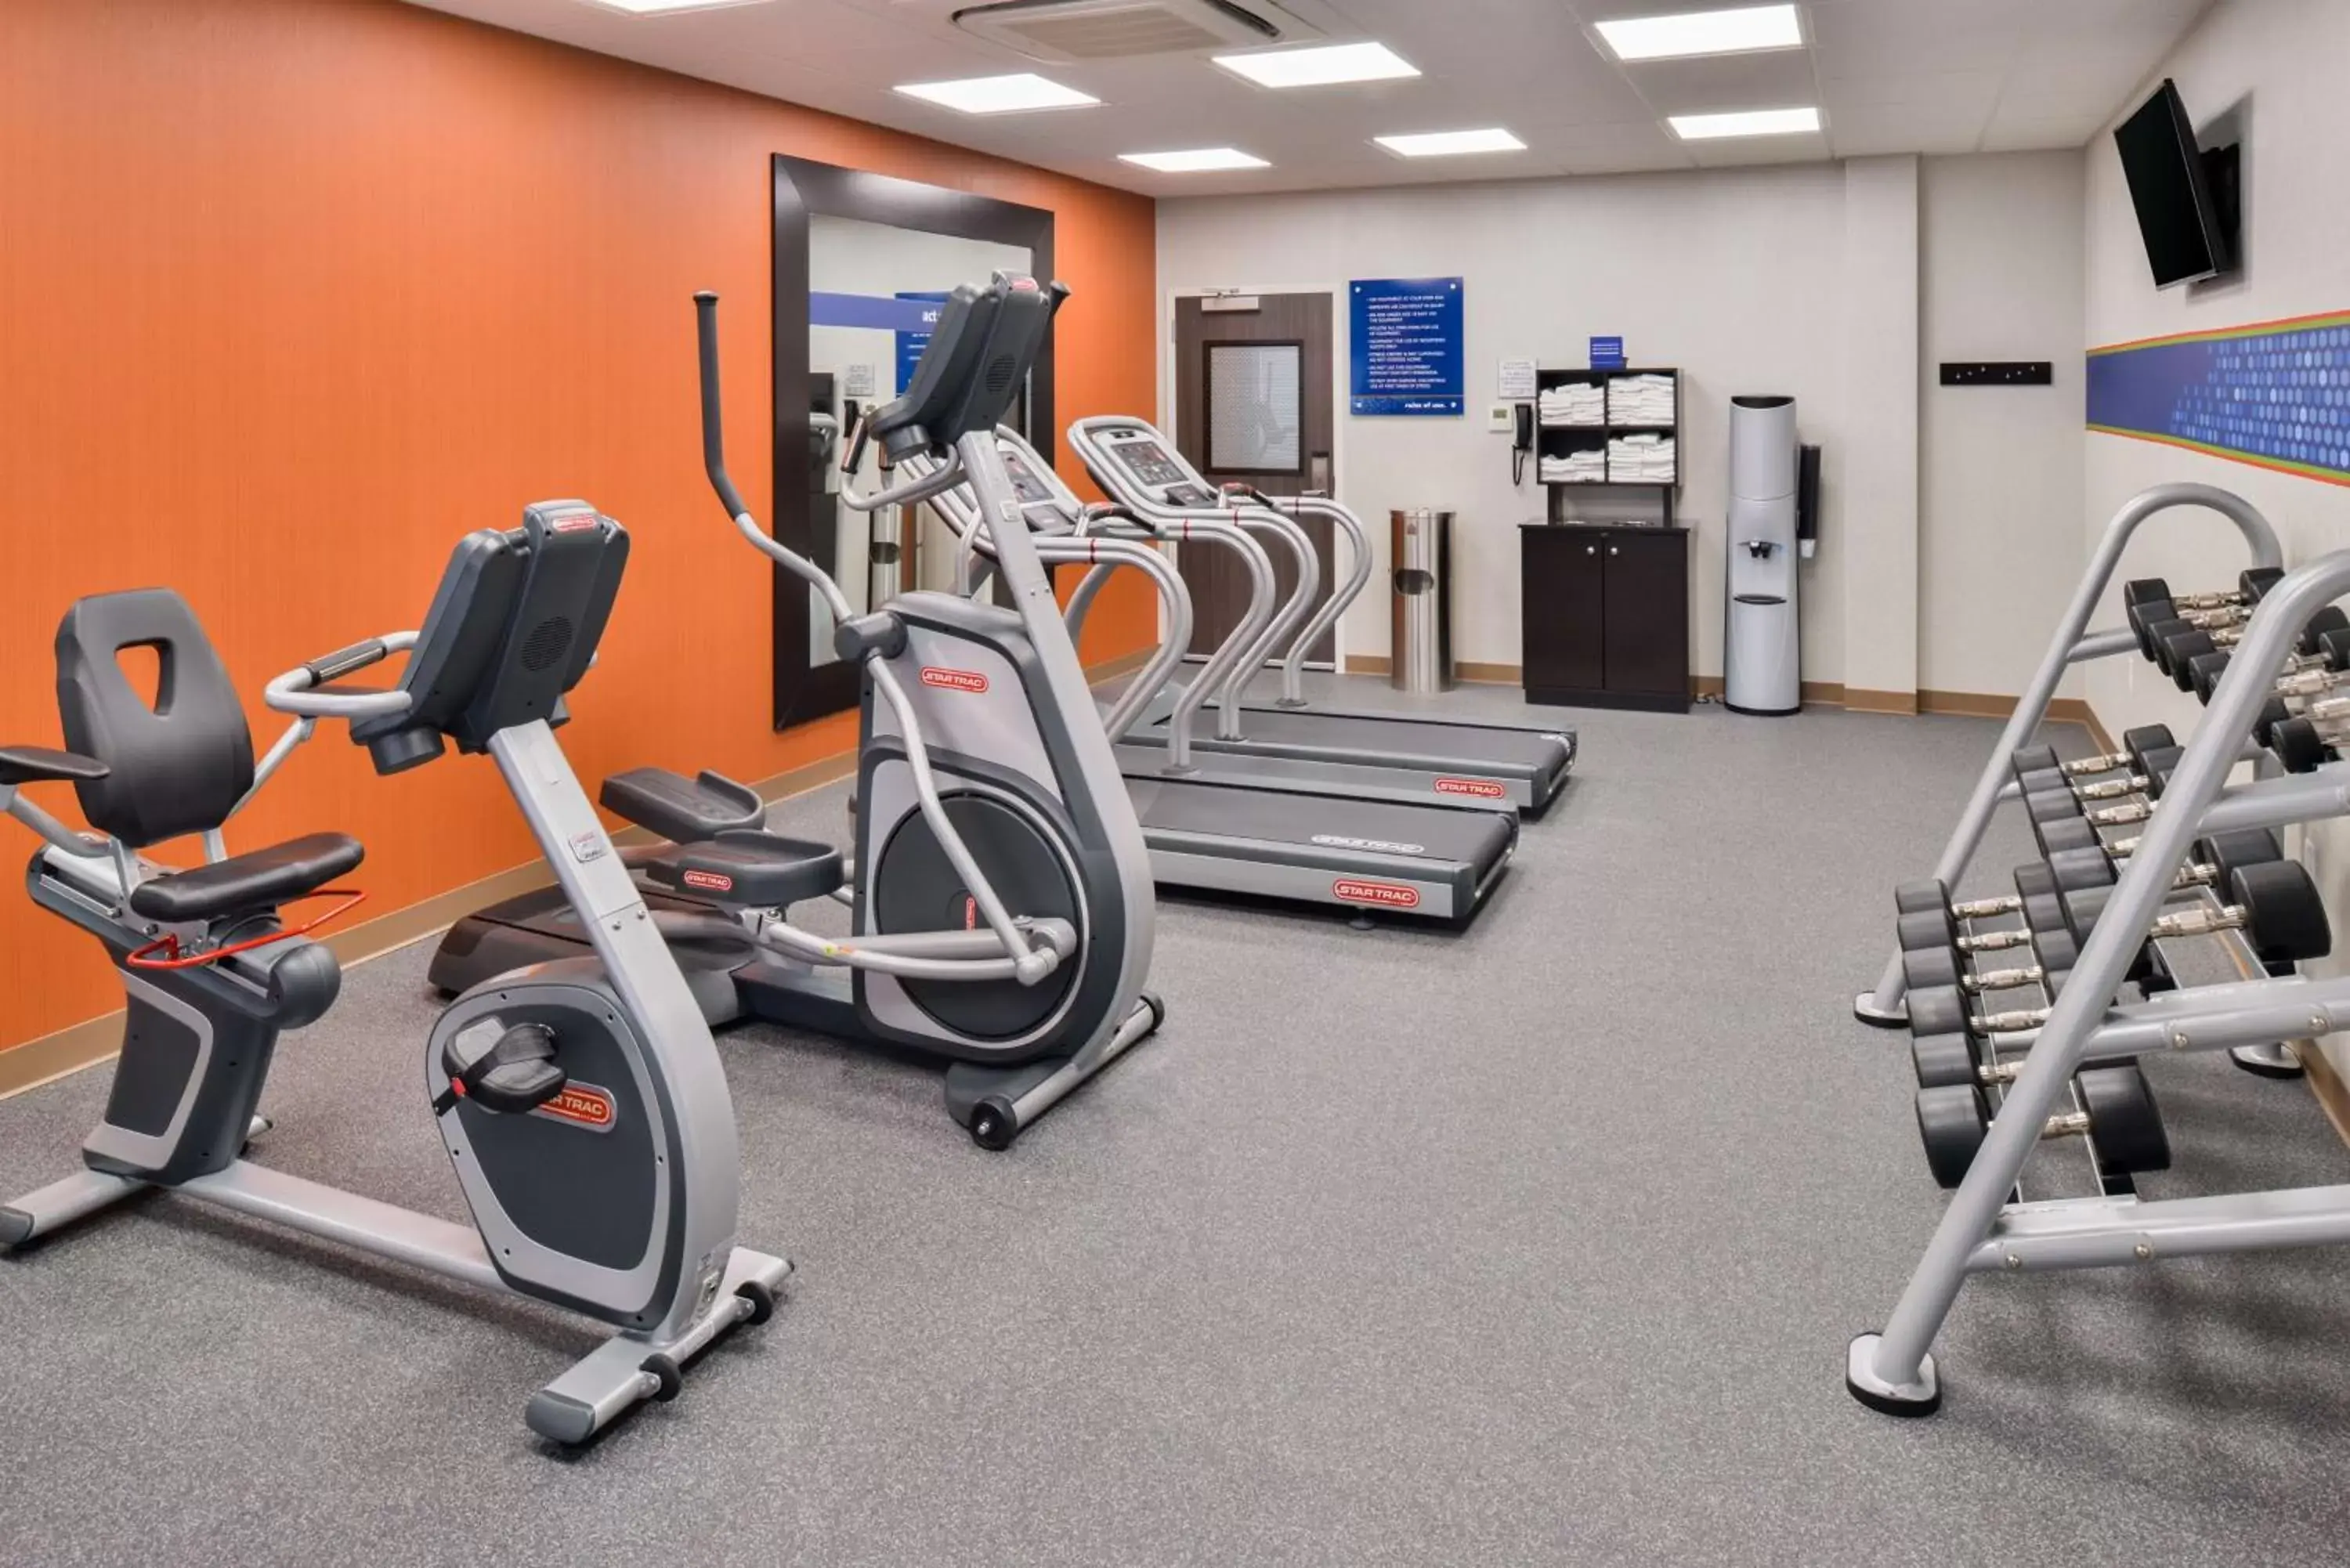 Fitness centre/facilities, Fitness Center/Facilities in Hampton Inn Emporia, KS